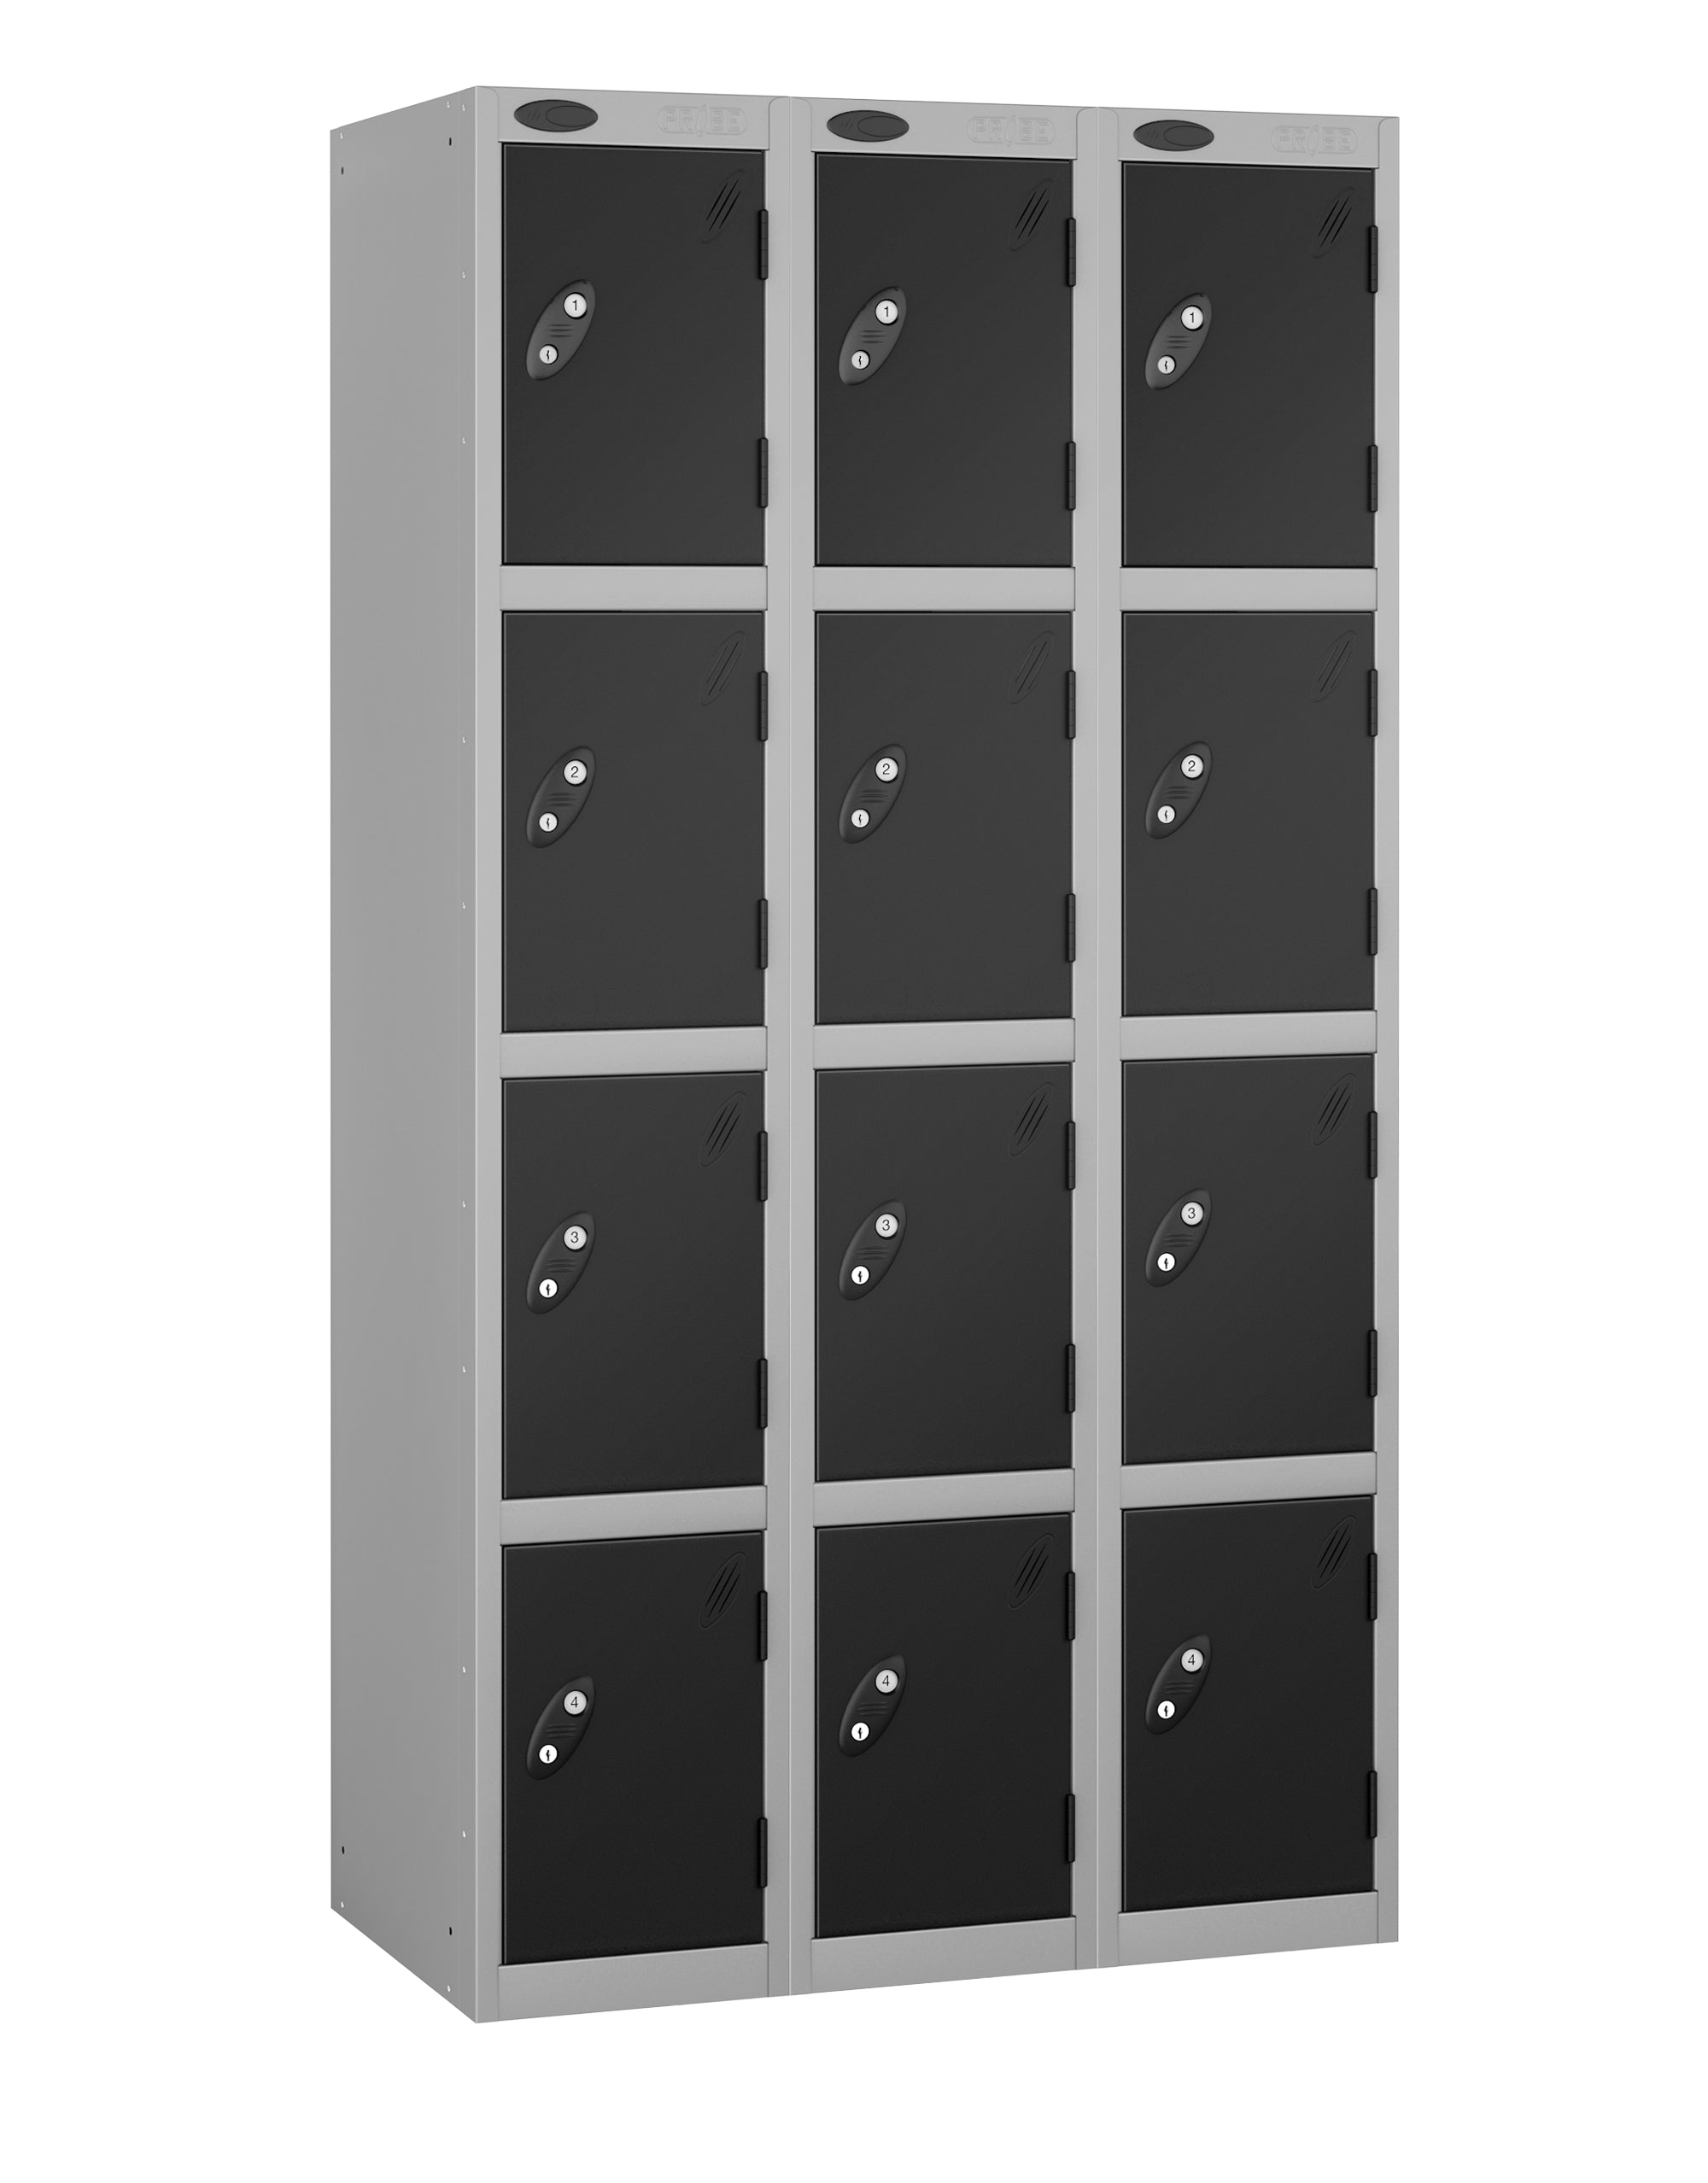 PROBEBOX STANDARD 3 NEST STEEL LOCKERS - JET BLACK 4 DOOR Storage Lockers > Lockers > Cabinets > Storage > Probe > One Stop For Safety   